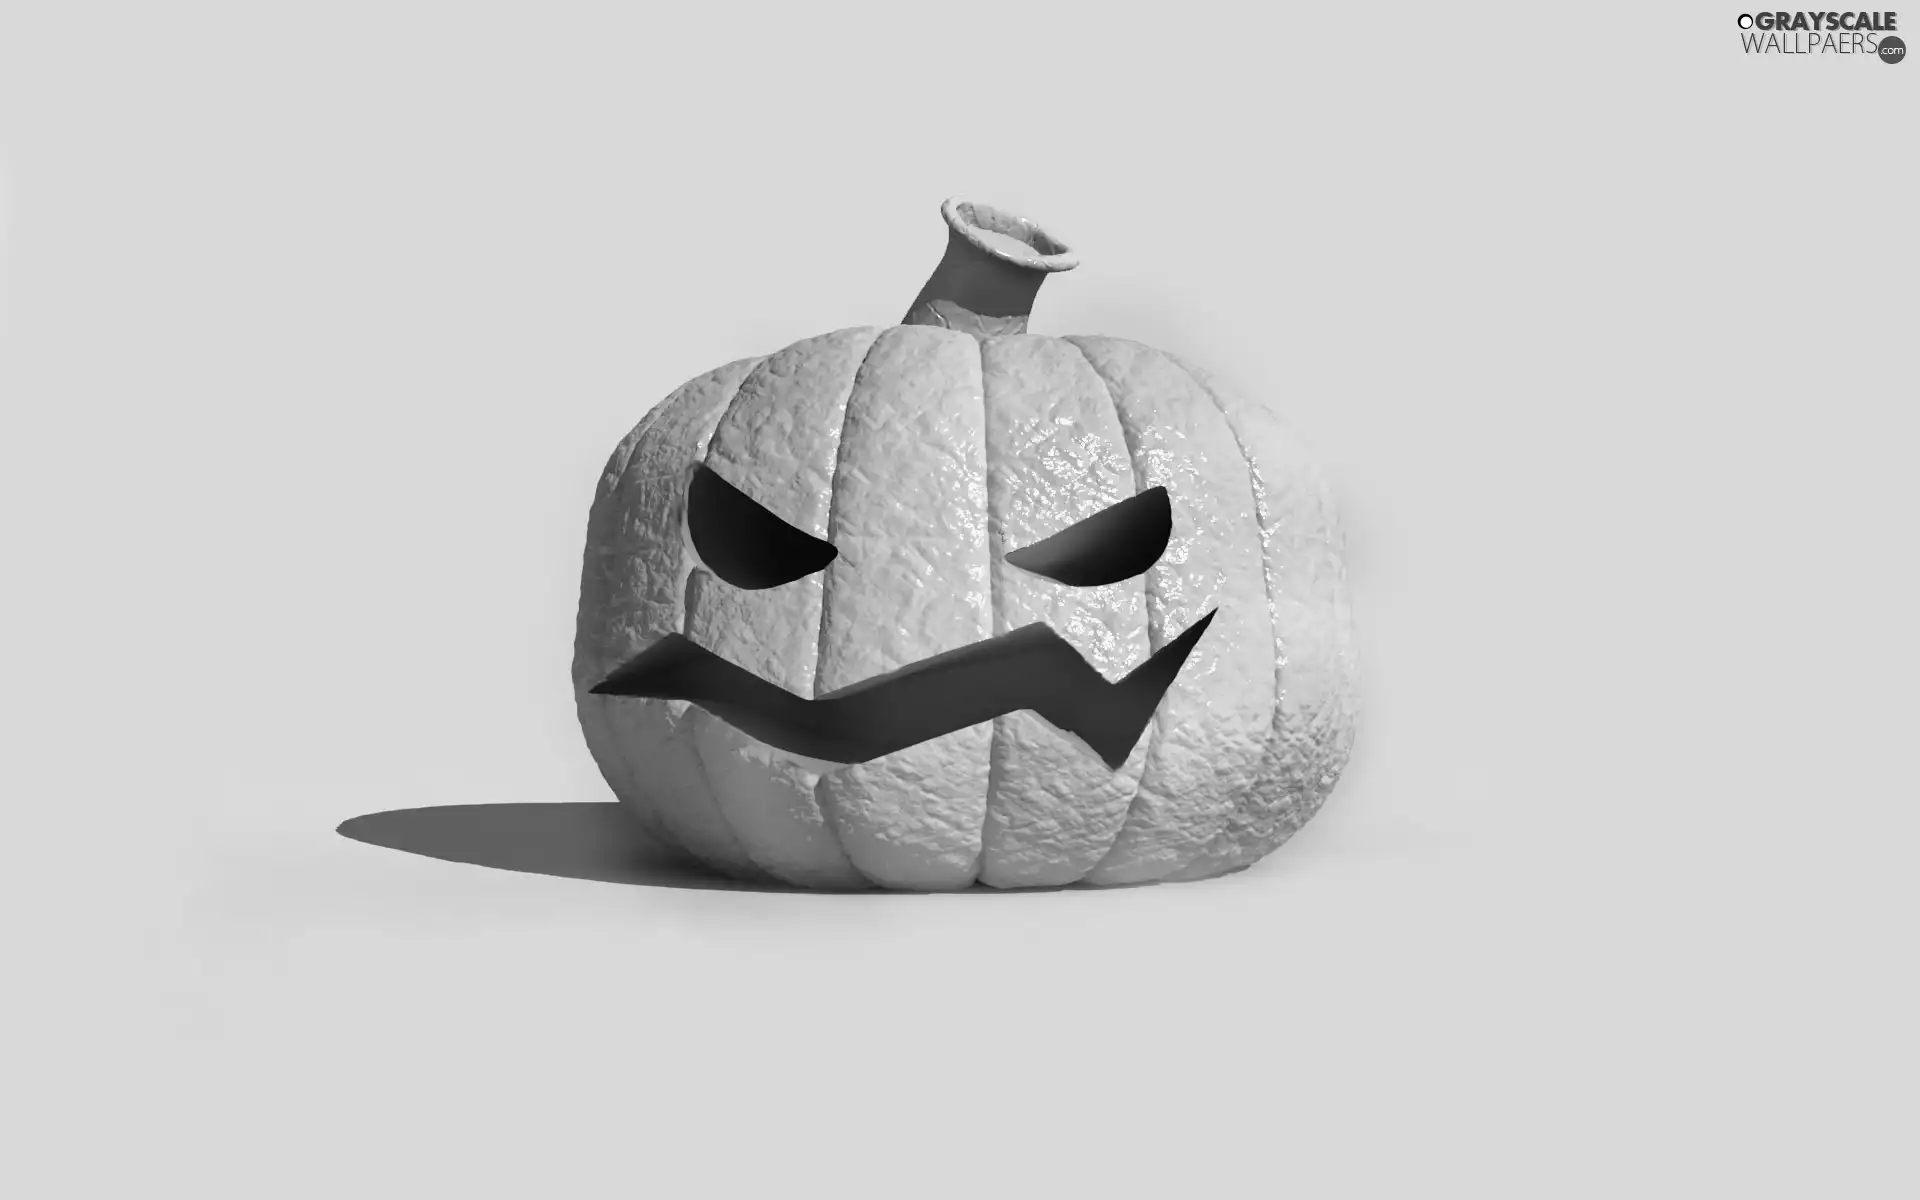 look, pumpkin, Scary